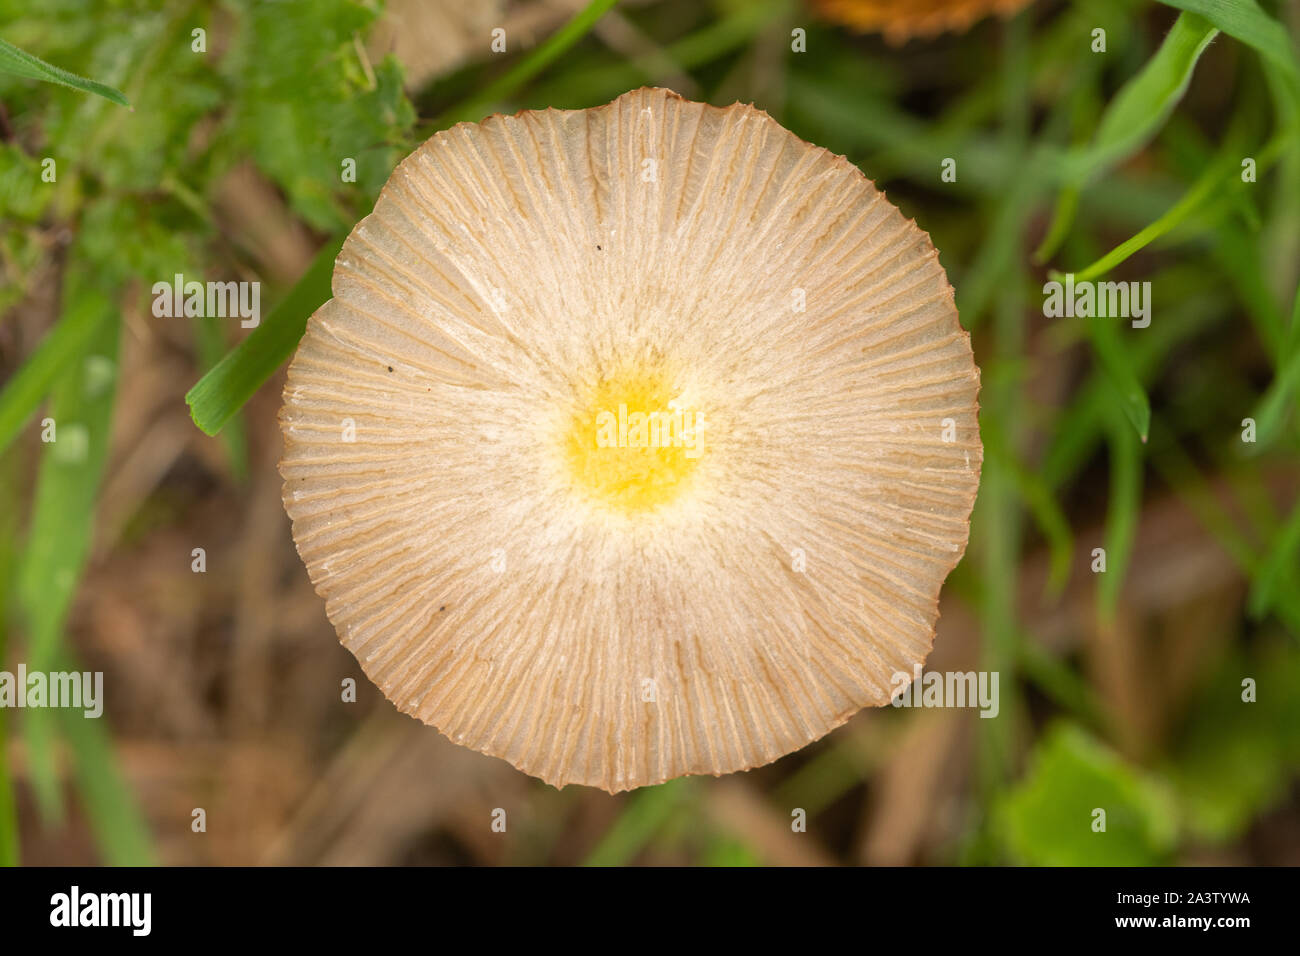 Little Japanese umbrella toadstool (Parasola plicatilis) or fungus viewed from above, UK fungi Stock Photo